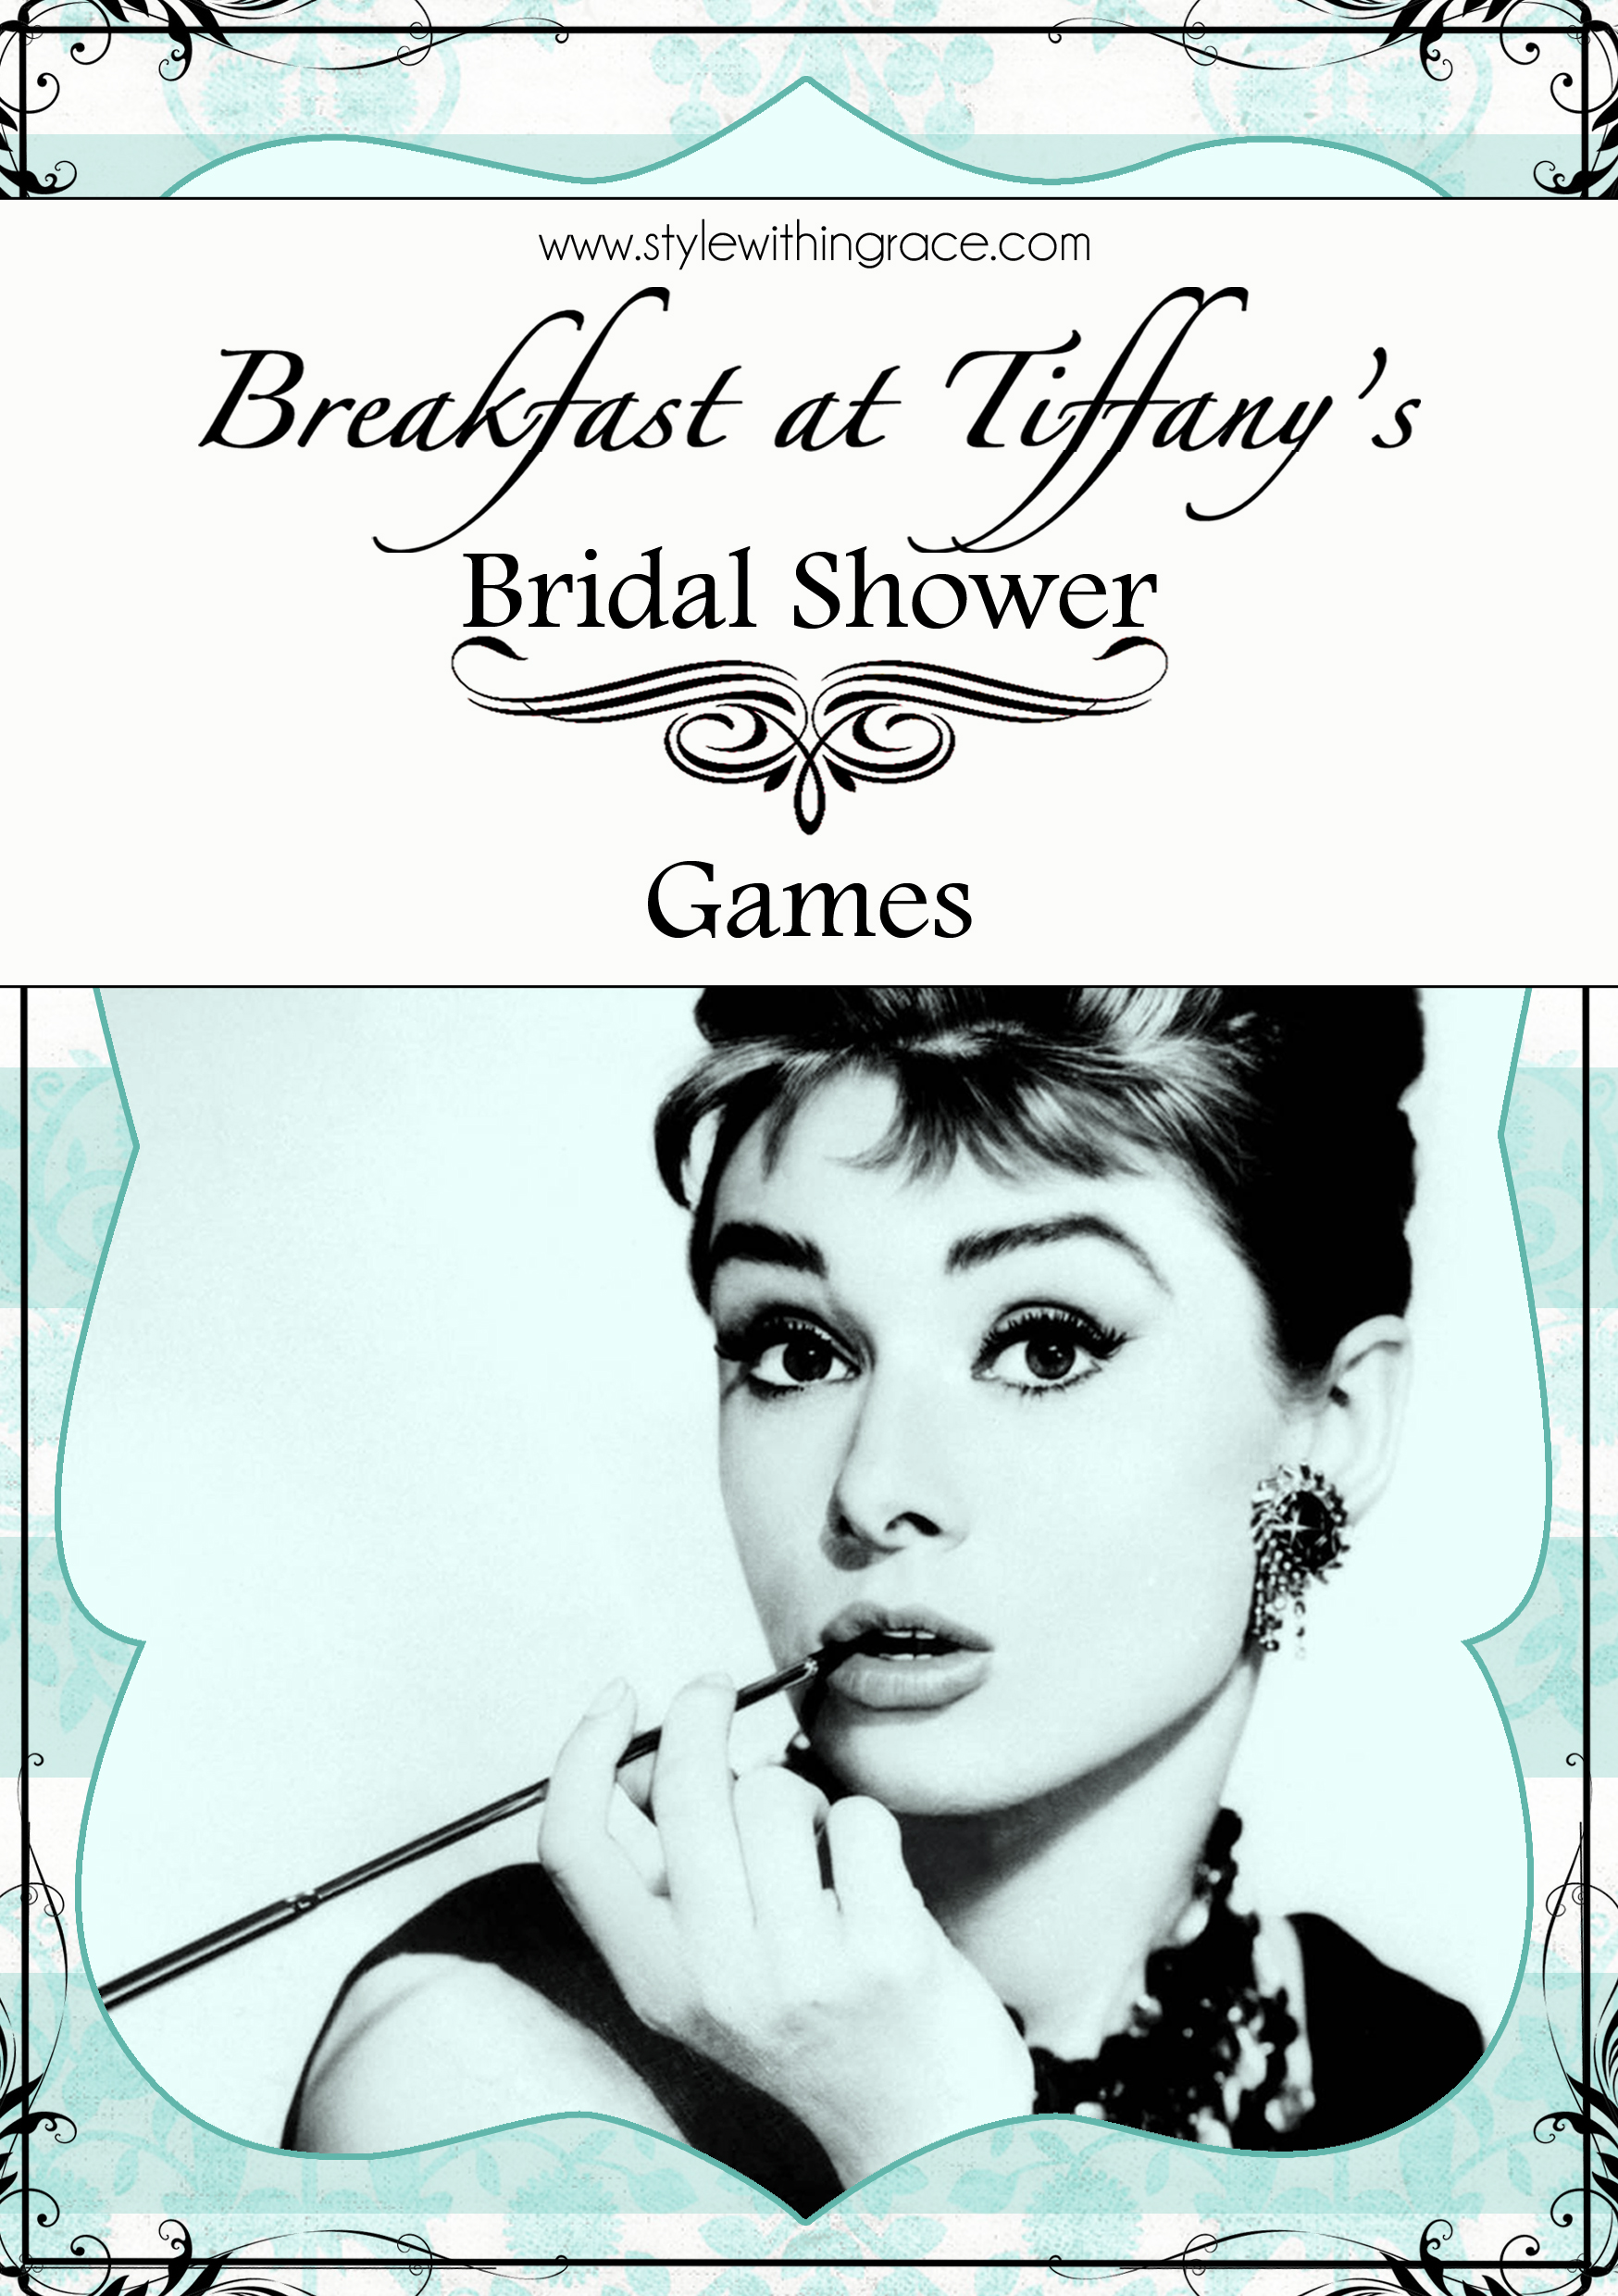 Breakfast at Tiffany's Bridal Shower Games